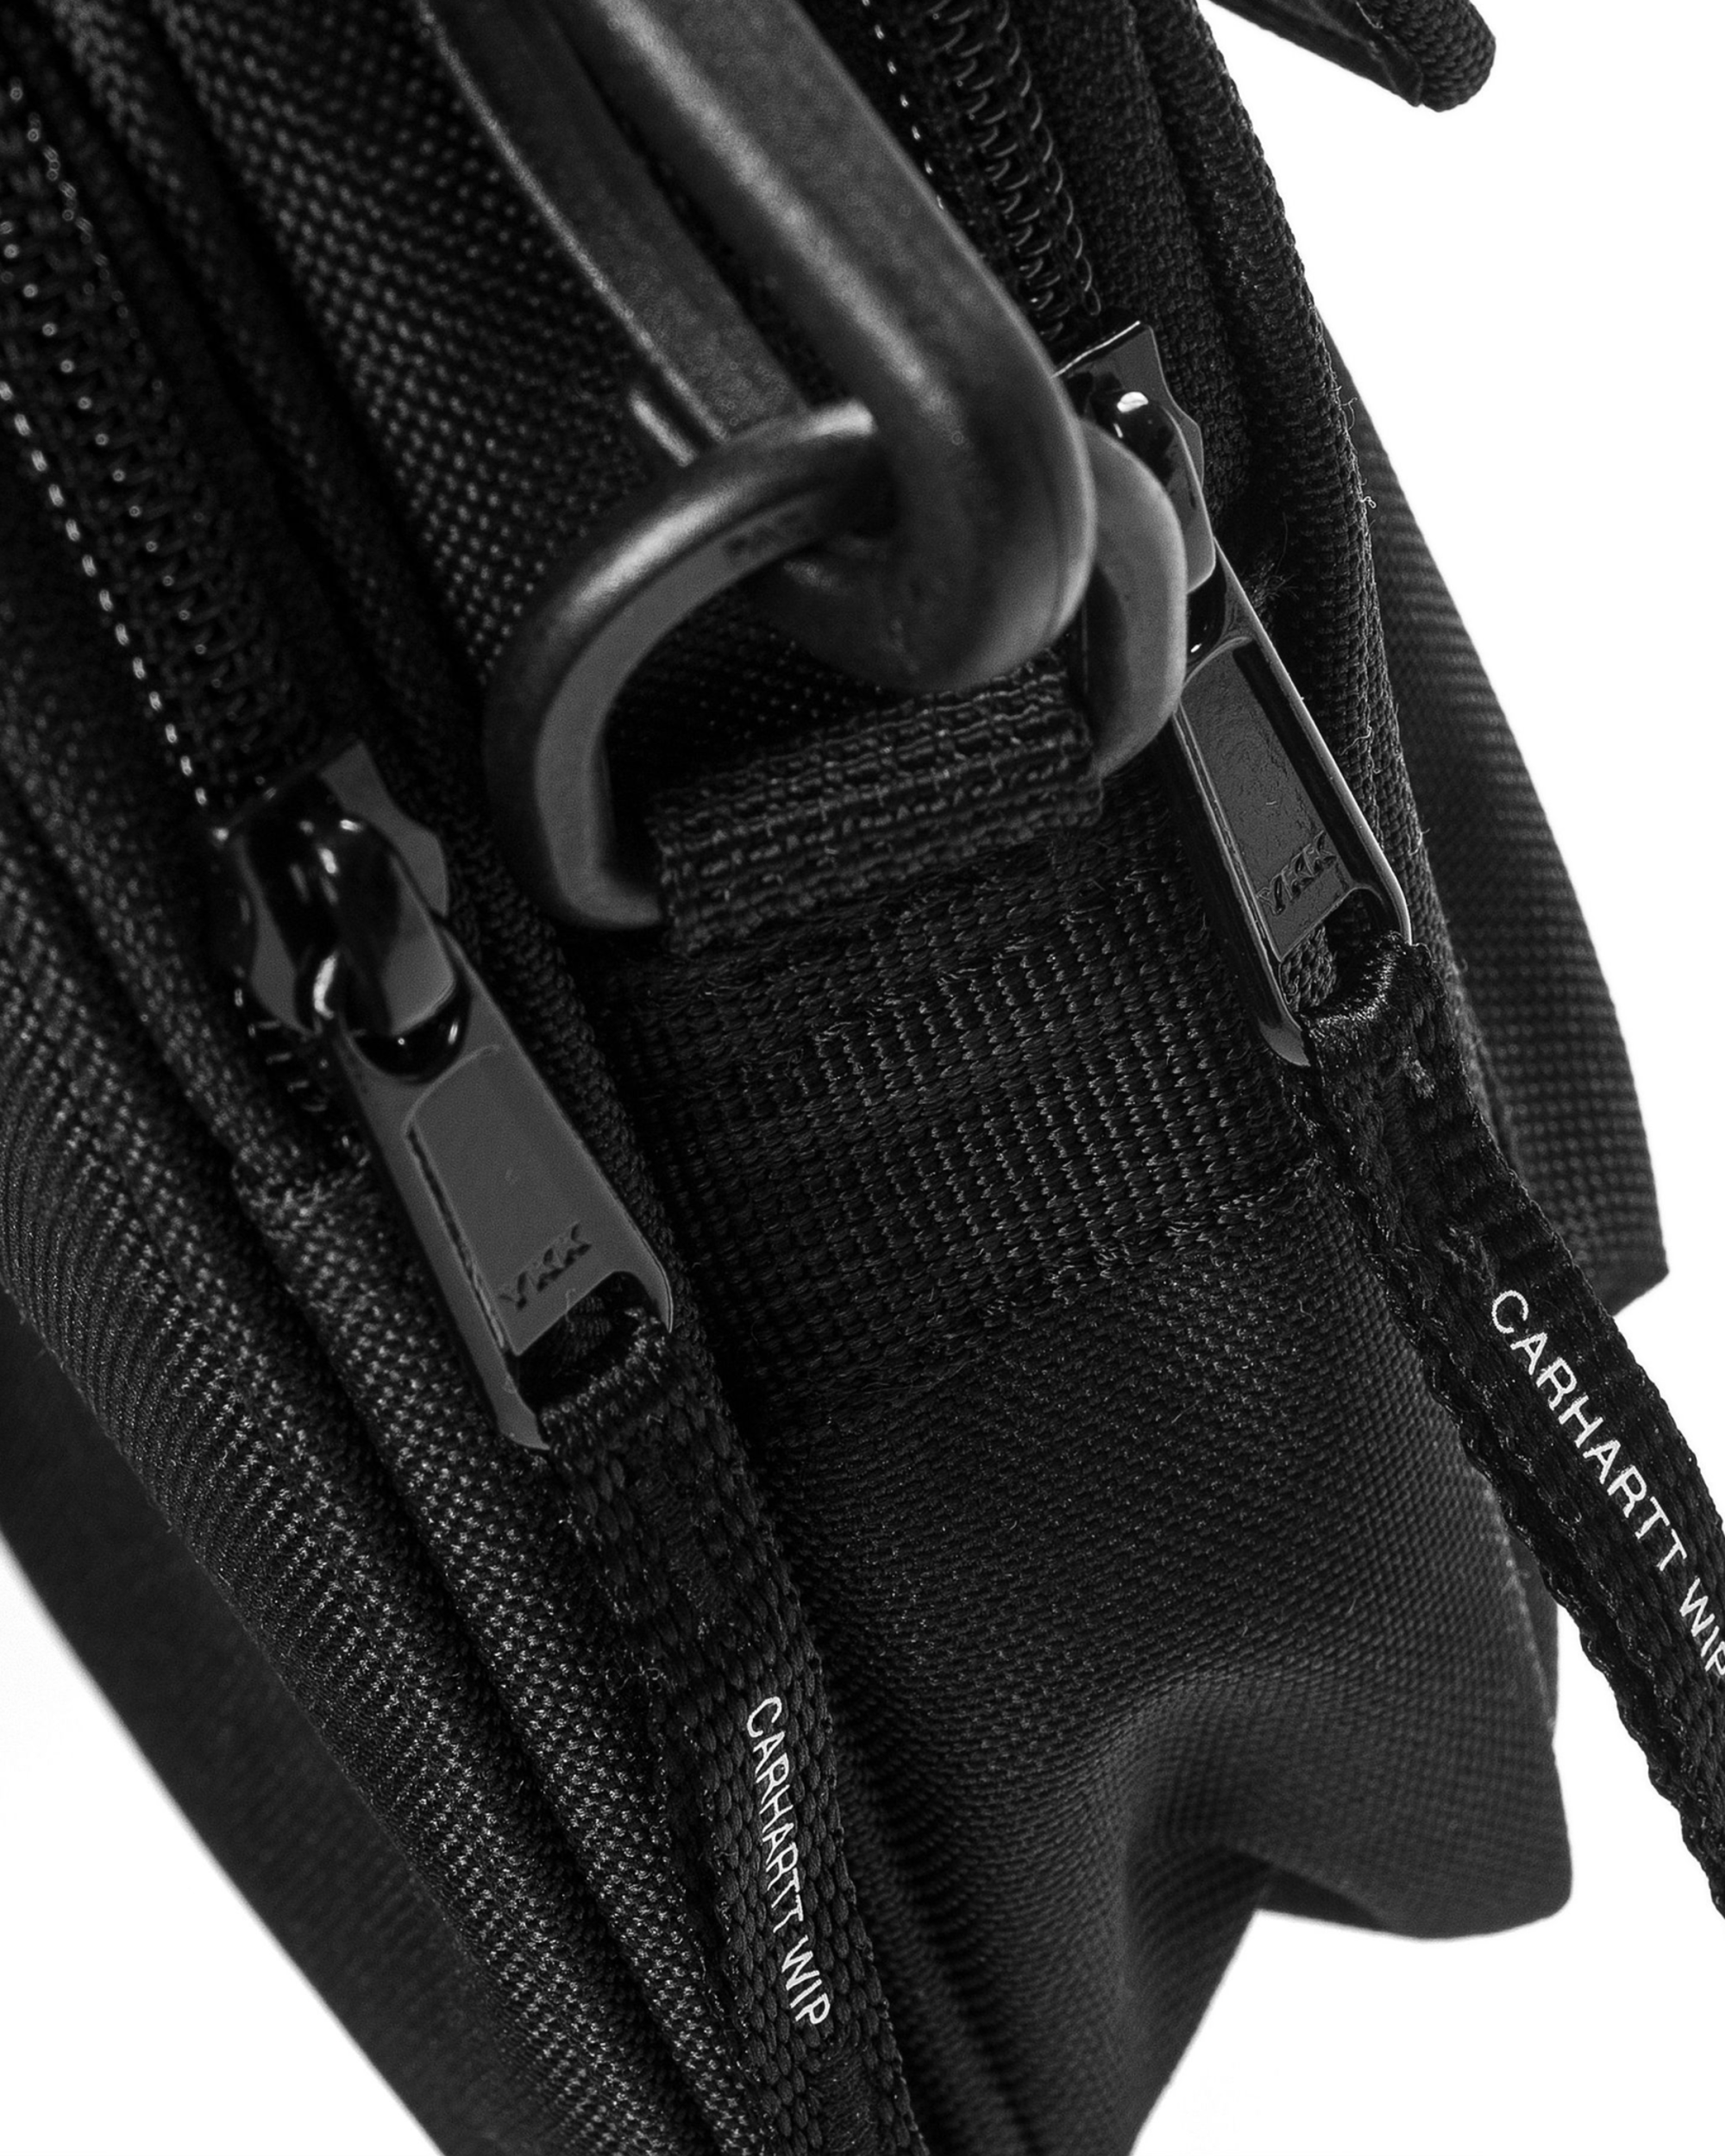 Carhartt WIP Essentials Bag, Small - Black